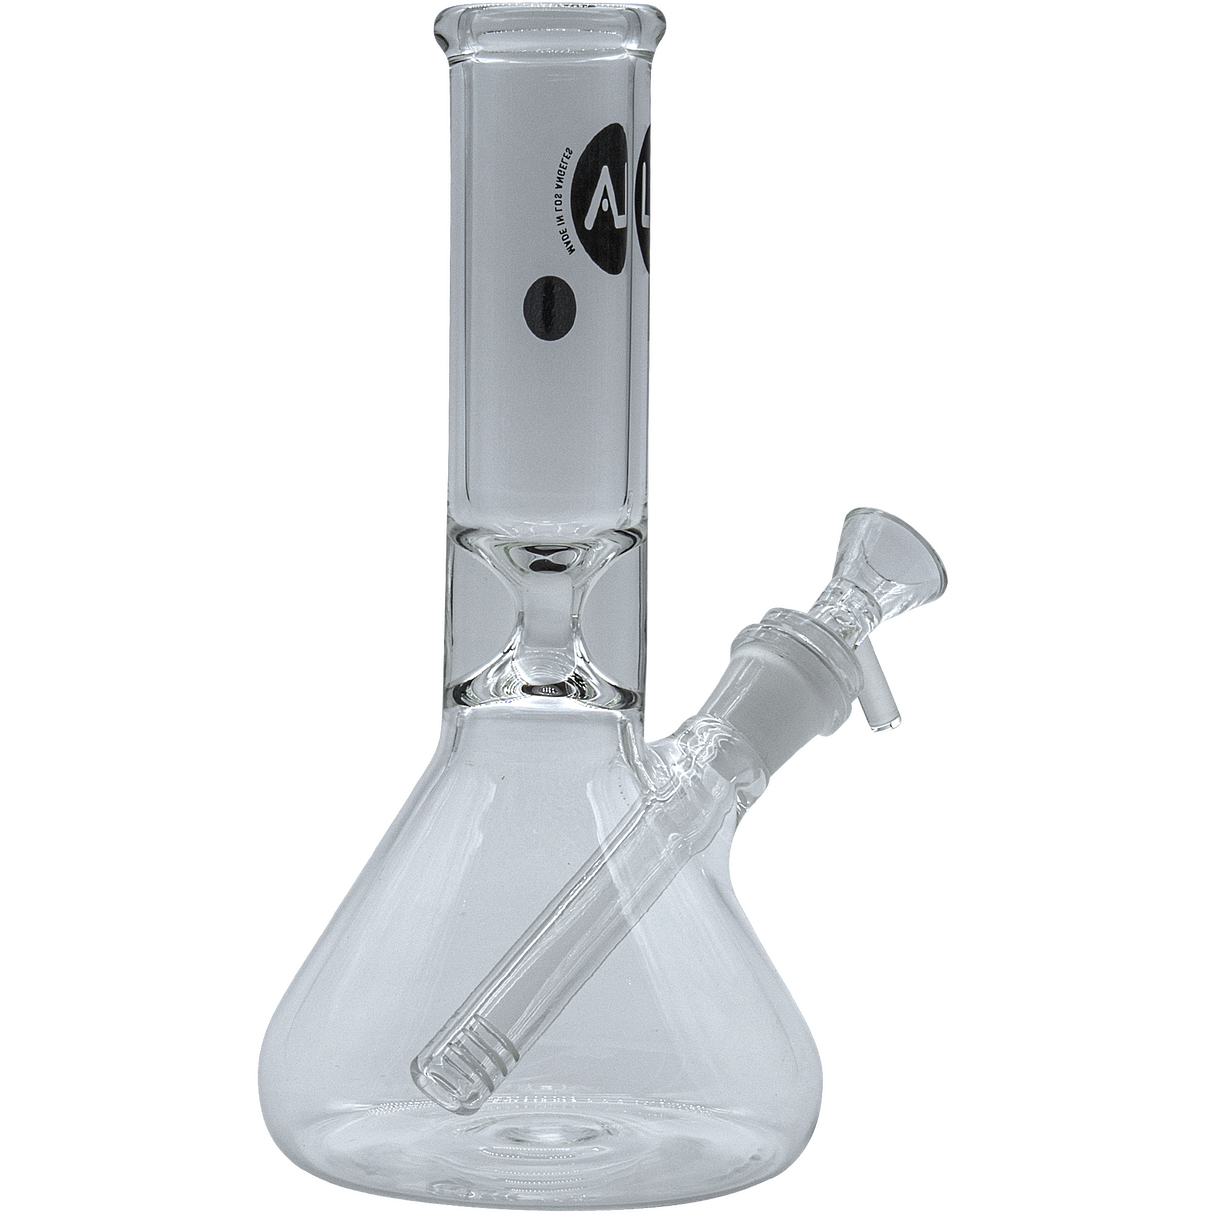 LA Pipes "Shortstop" Beaker Bong in Borosilicate Glass - 10" Height, 14mm Female Joint